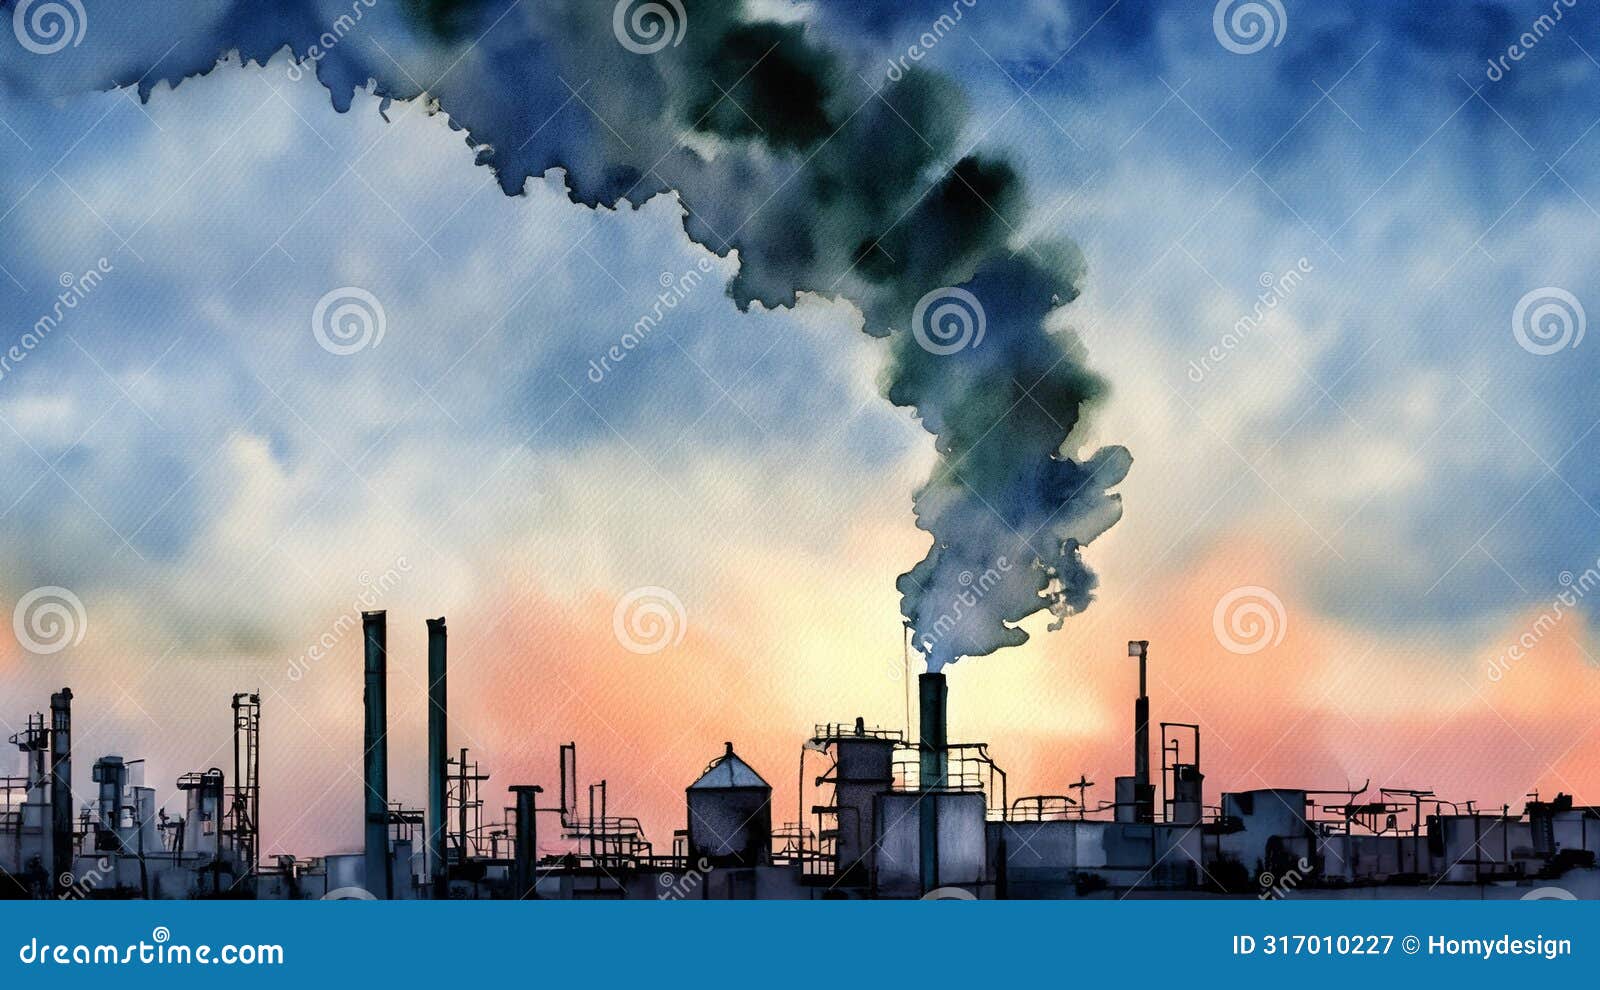 a vivid portrayal of industrial smokestacks discharging dark smoke into a twilight sky